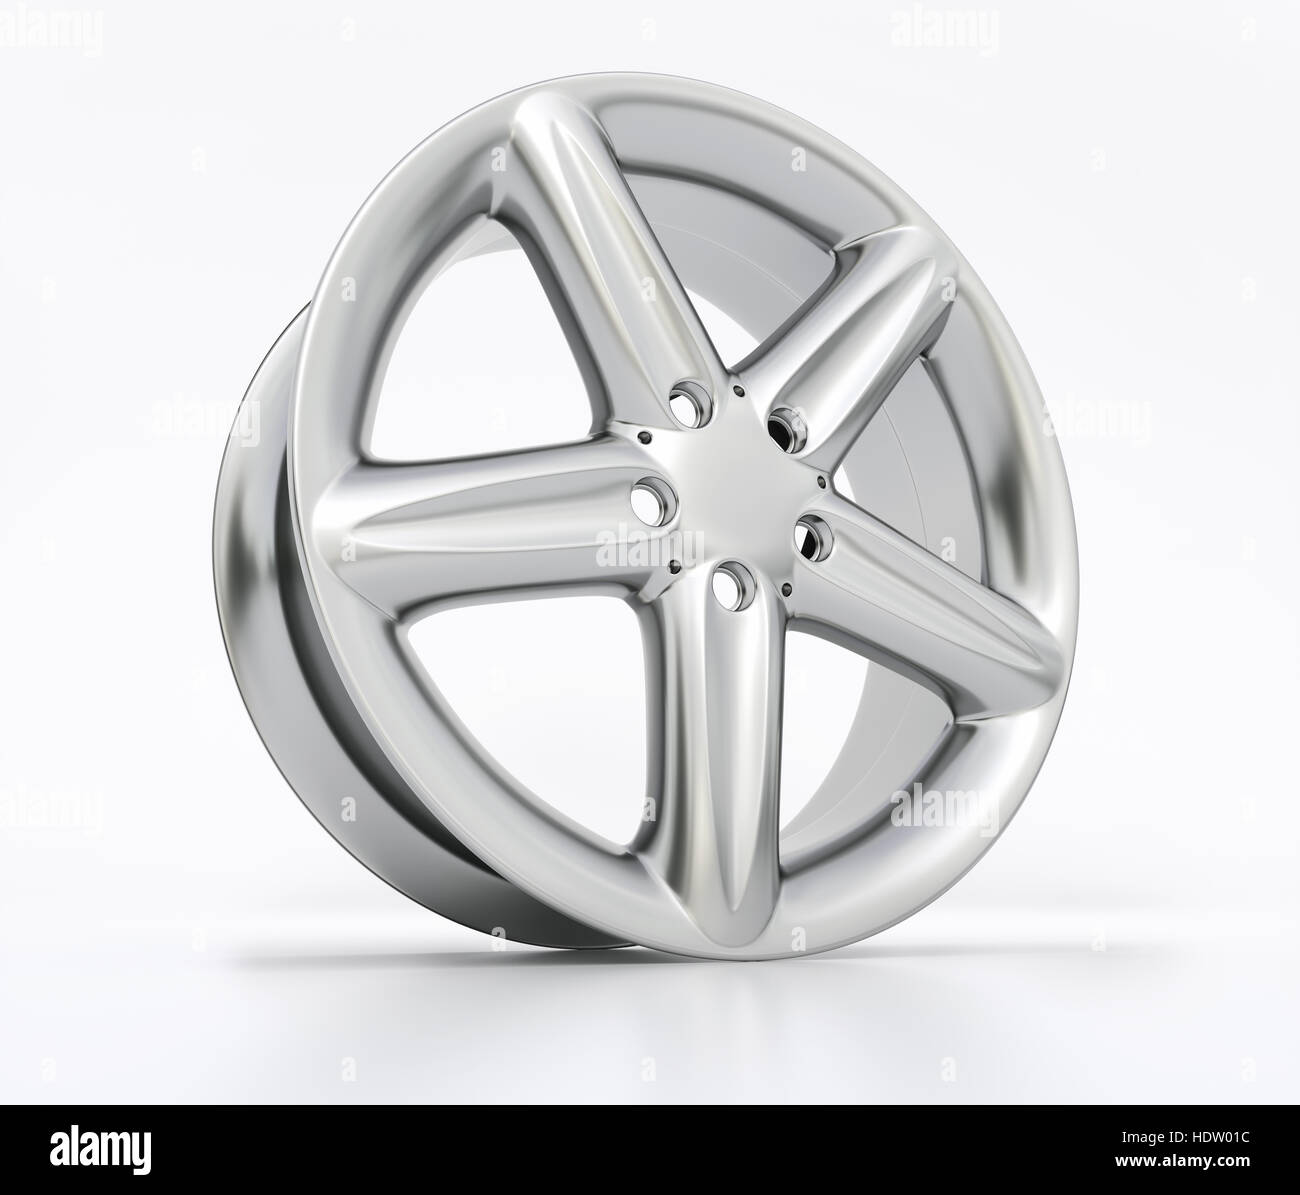 Aluminum wheel image high quality - 3D rendering Stock Photo